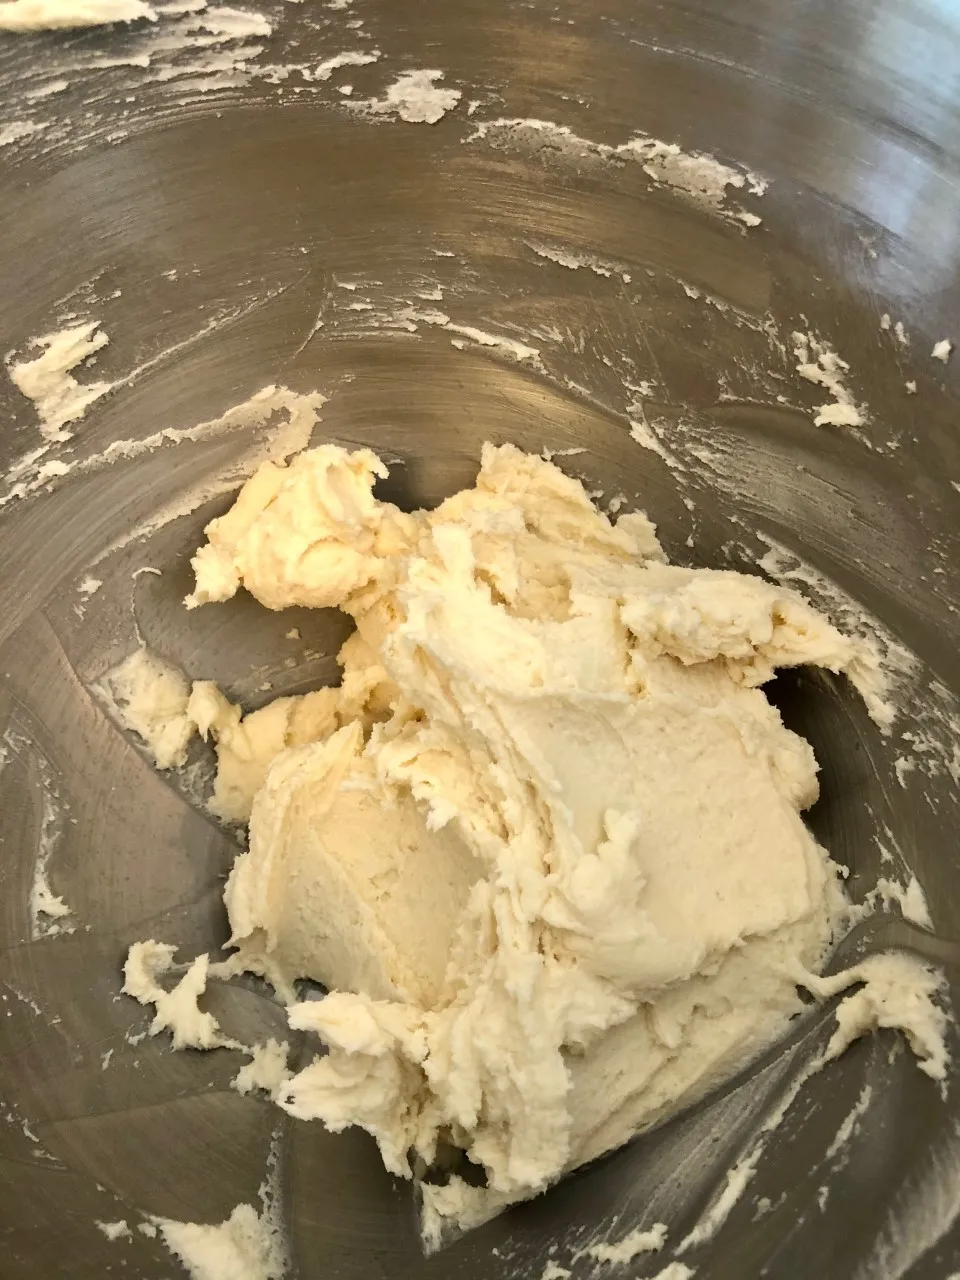 An image of lemon bar crust dough in a mixing bowl